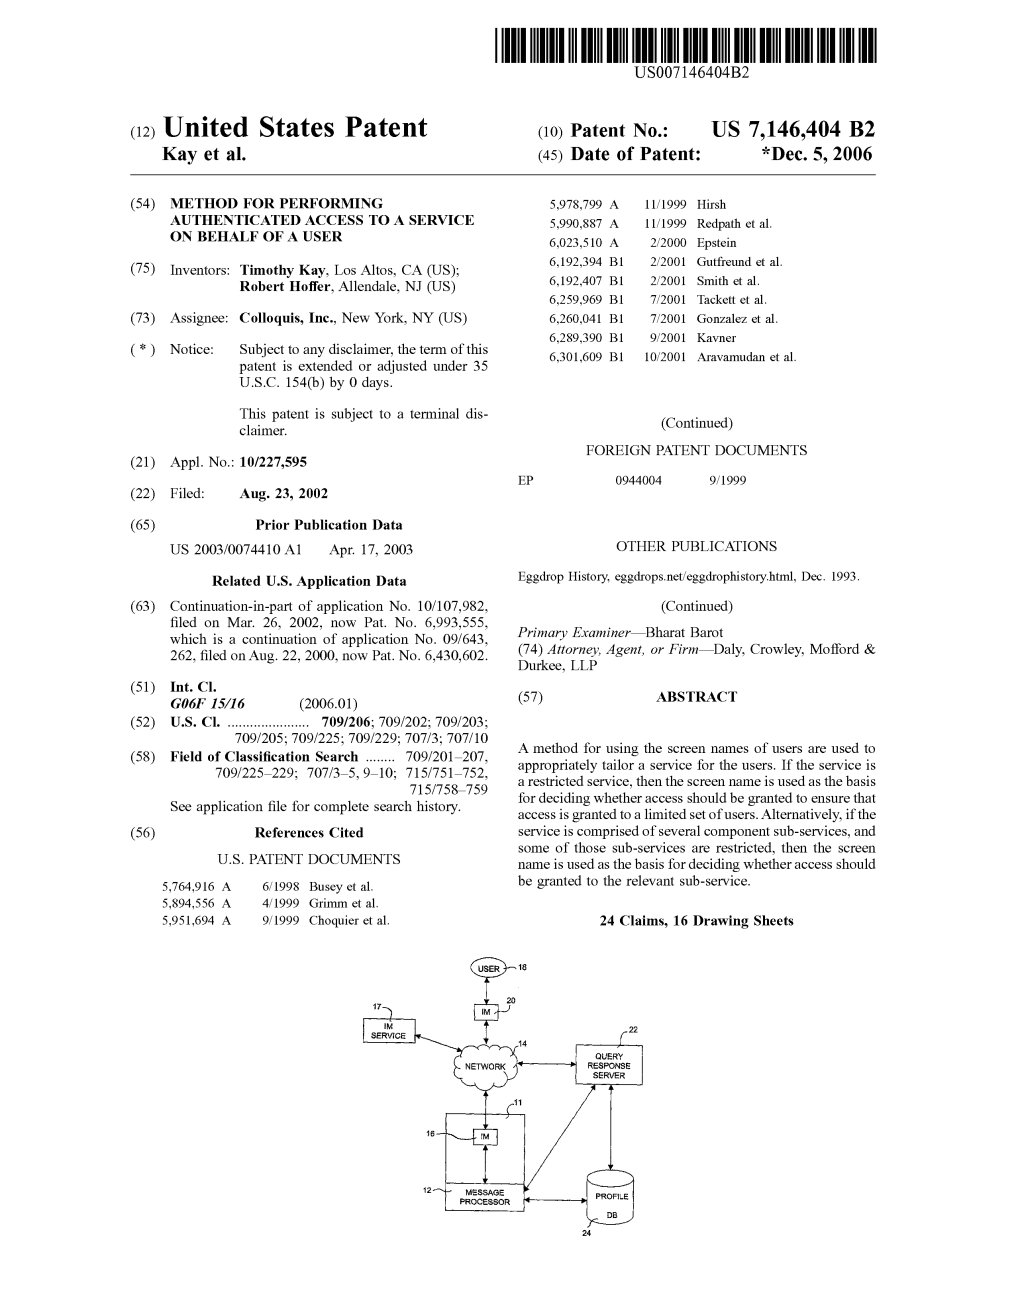 United States Patent (10) Patent N0.: US 7,146,404 B2 Kay Et A]